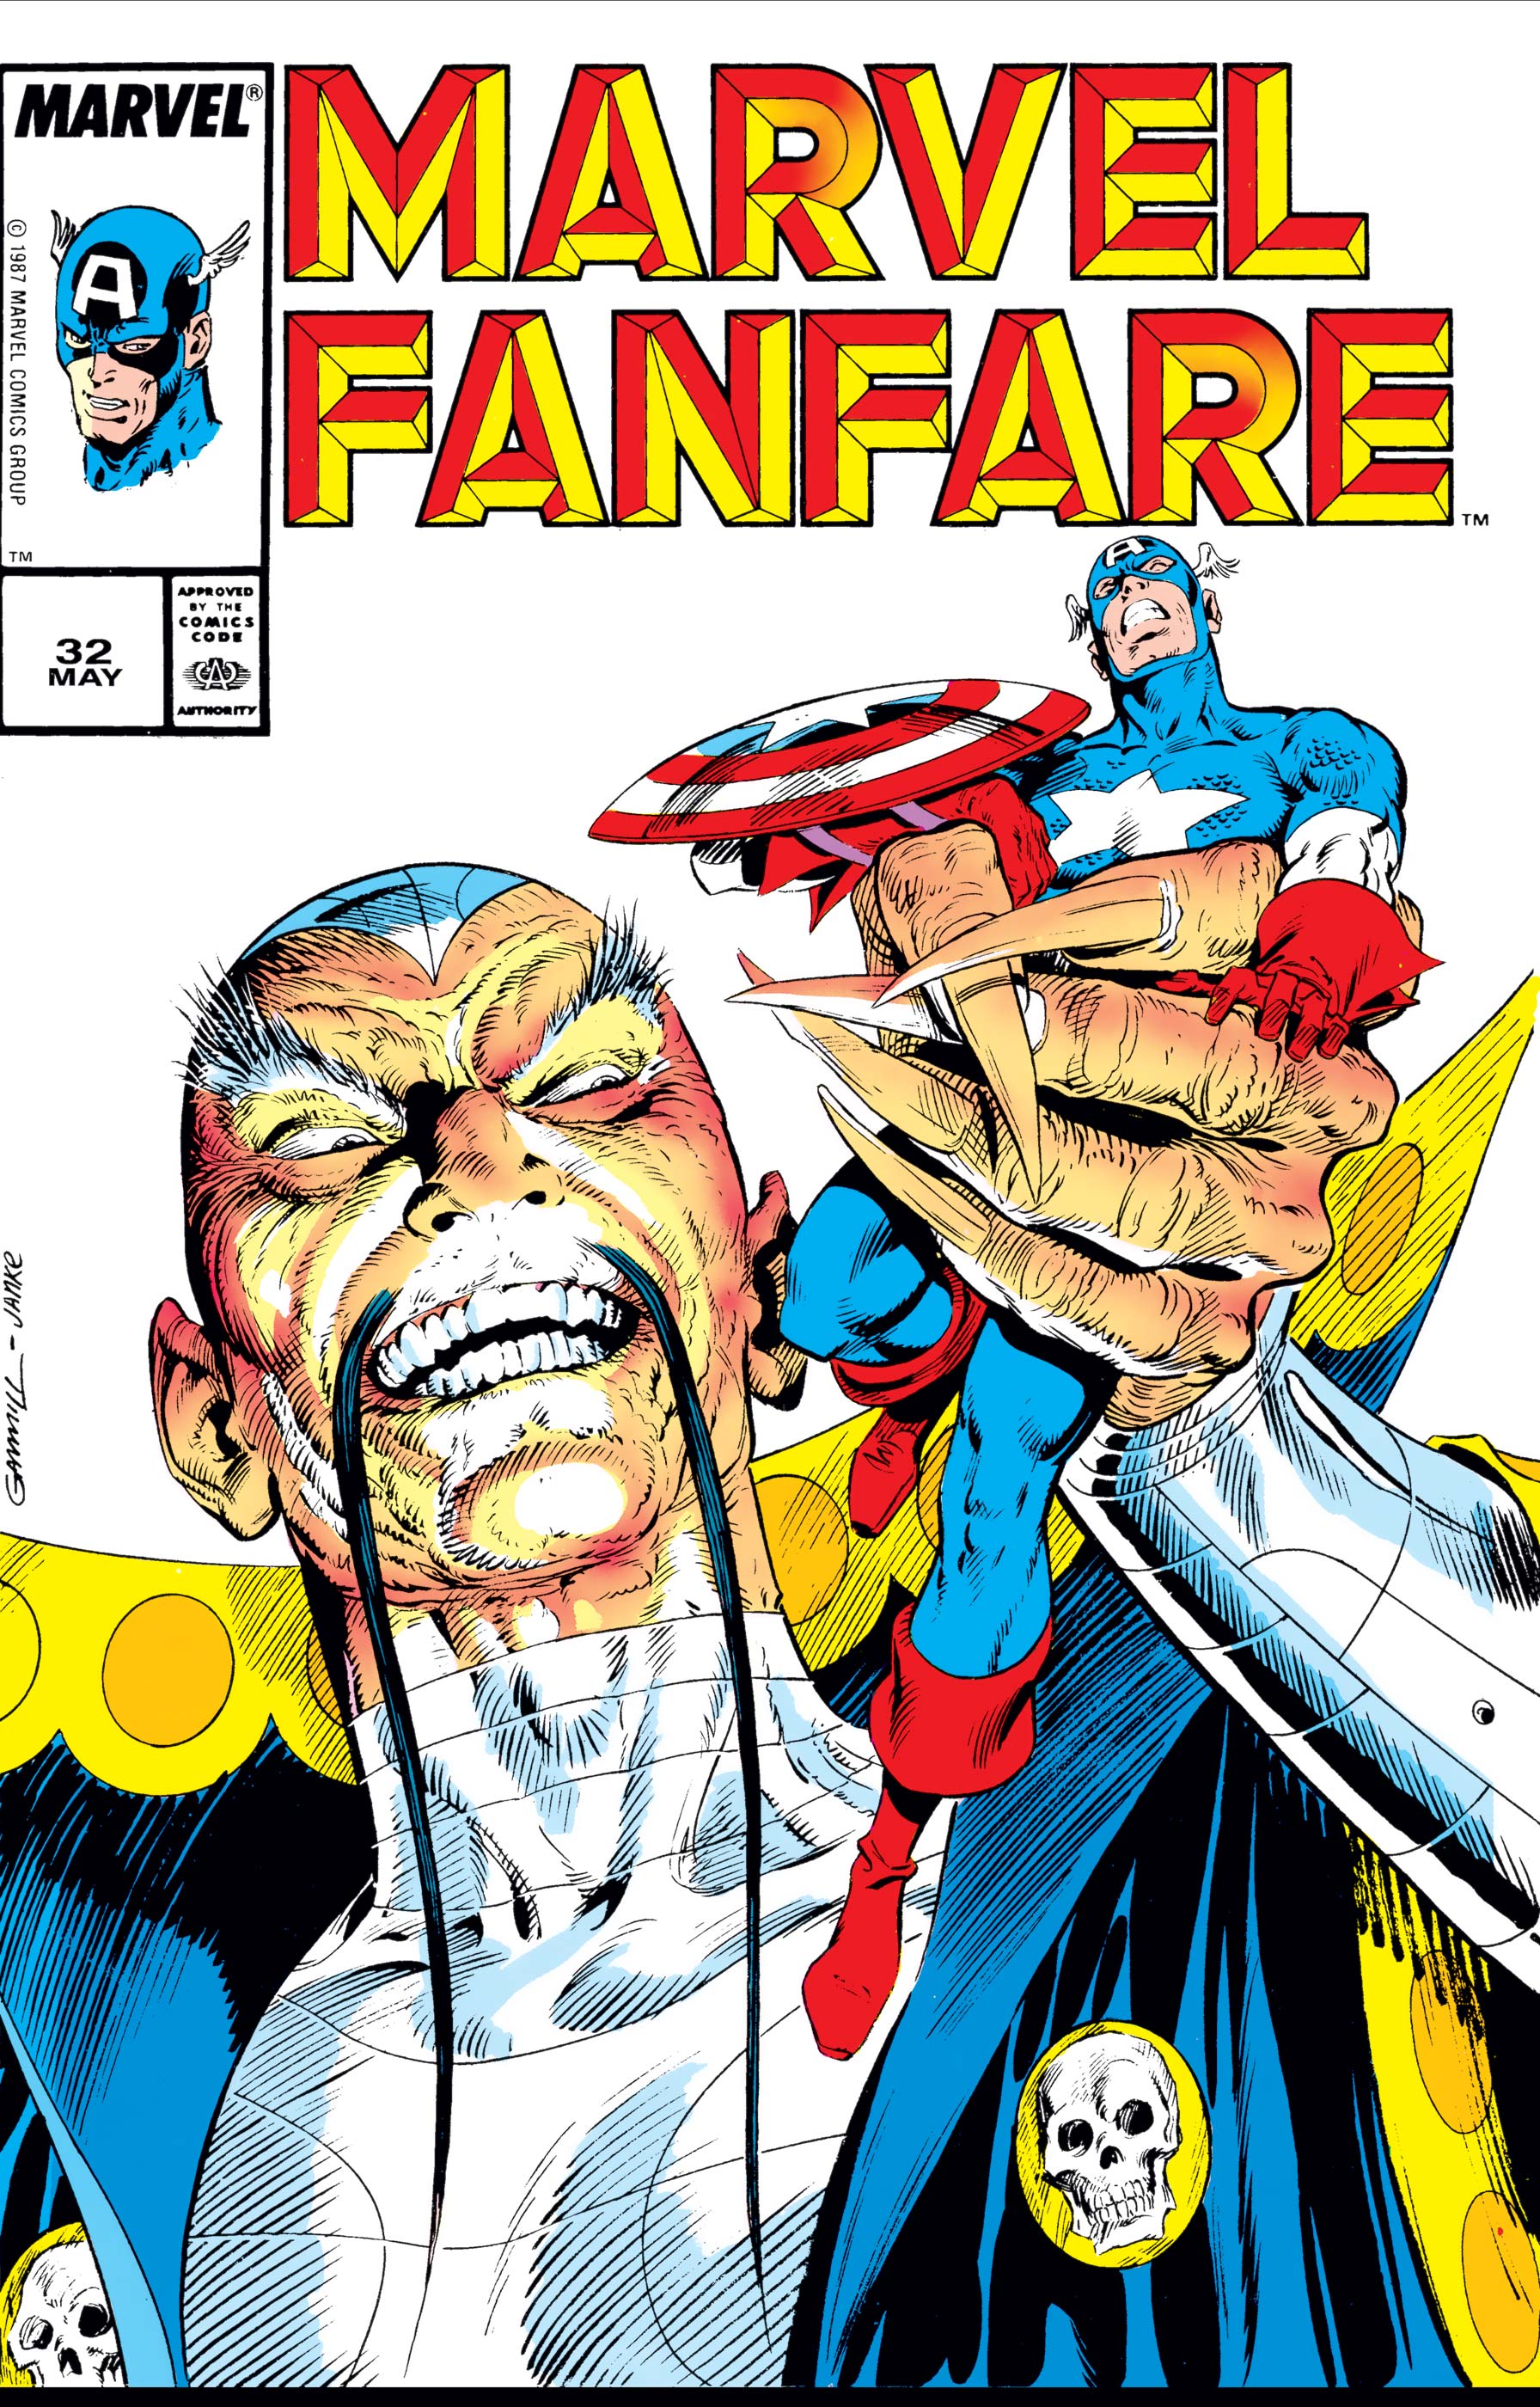 Marvel Fanfare (1982) #32